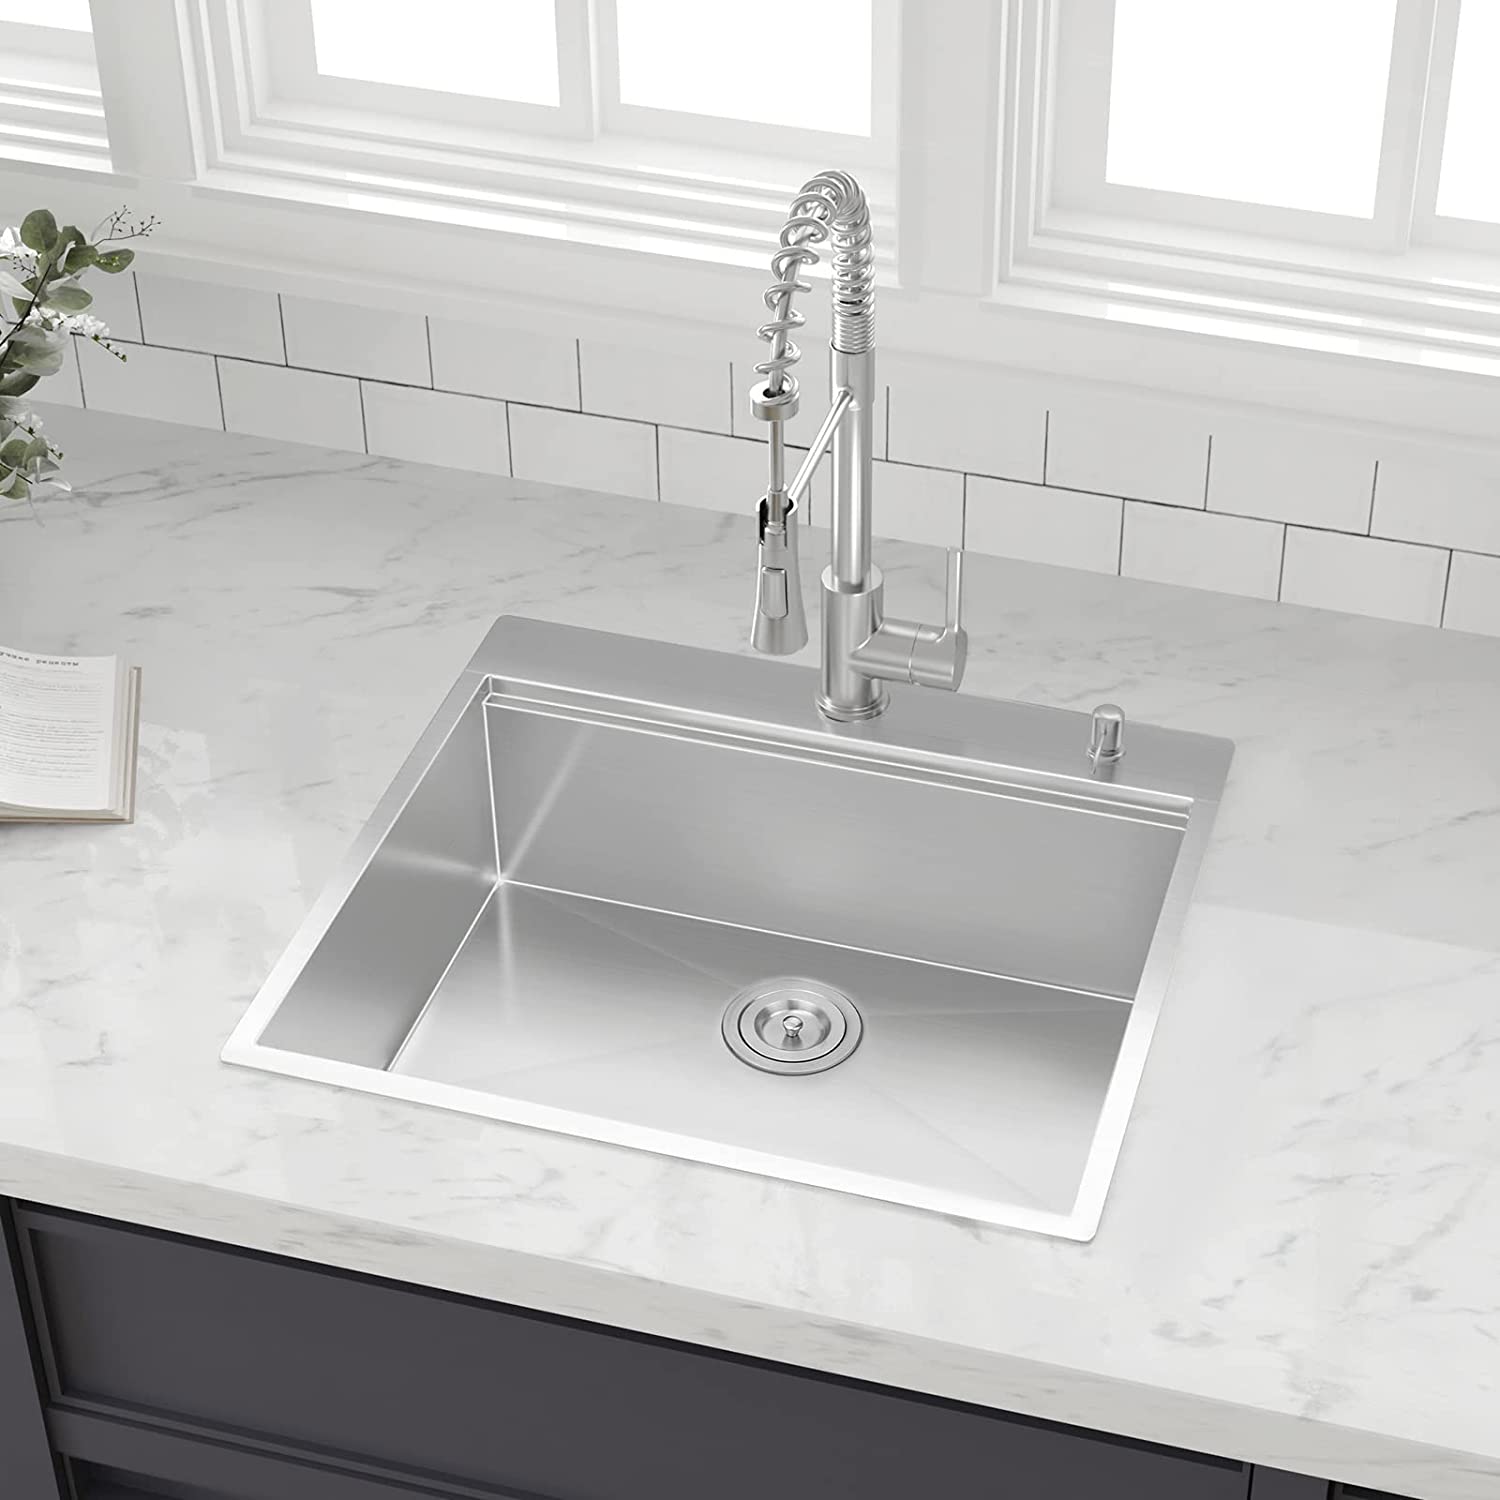 25 x 22 inch Drop-in Kitchen Sink, Handmade Workstation Kitchen Sink 18  Gauge with Ledge, Topmount Stainless Steel Single Bowl Sink